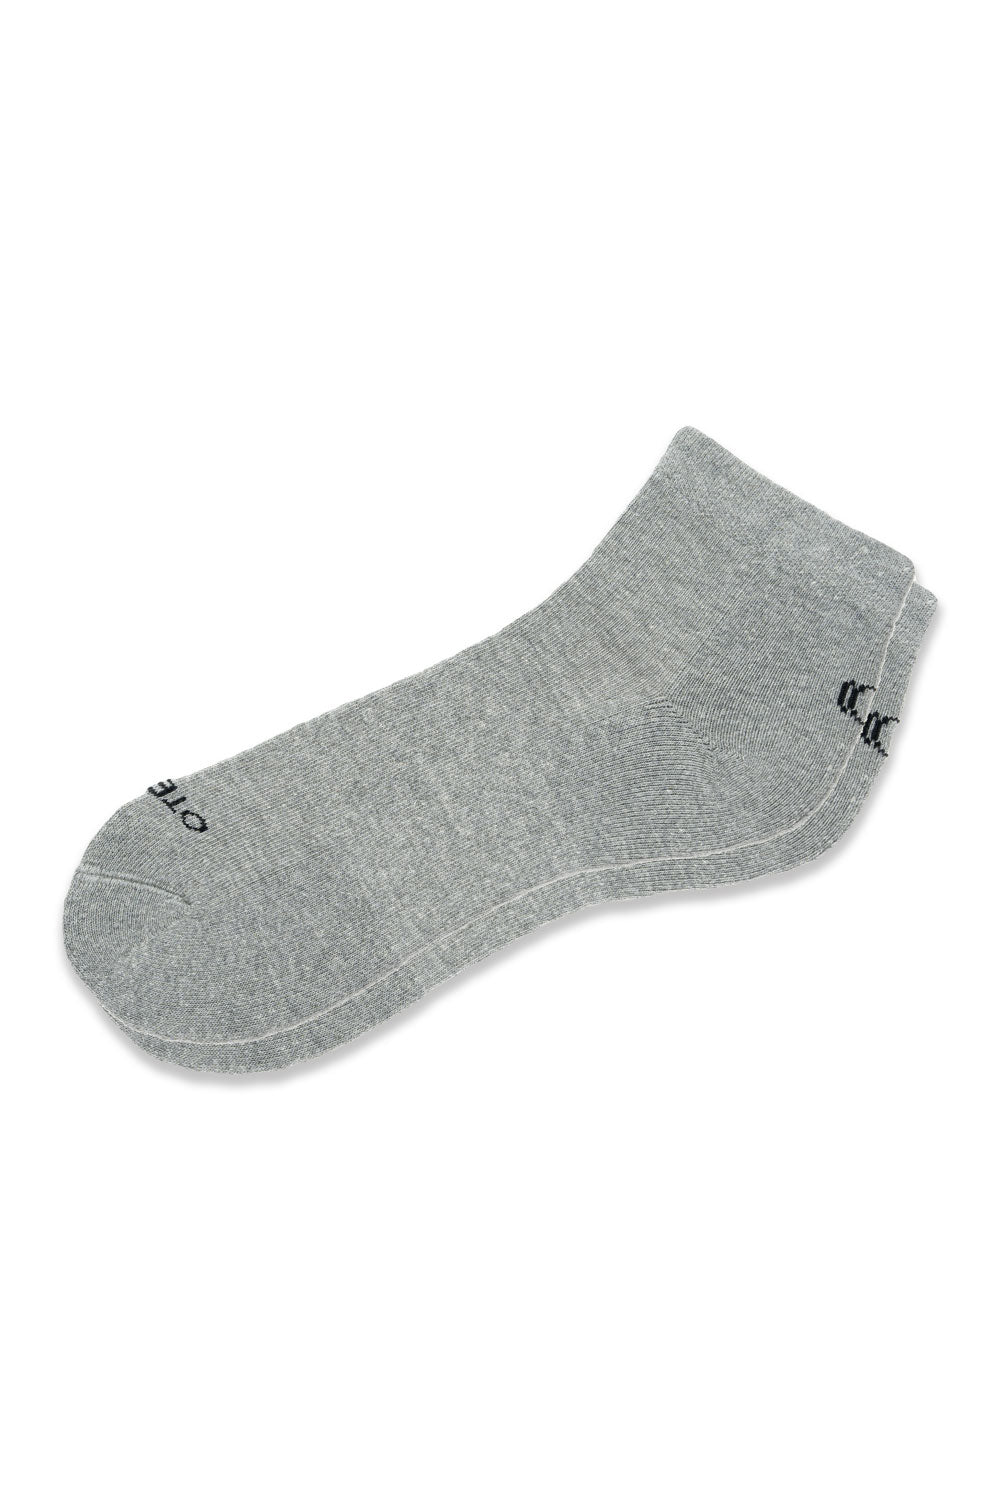 Basic Quarter Socks Heather Grey Pack of 3